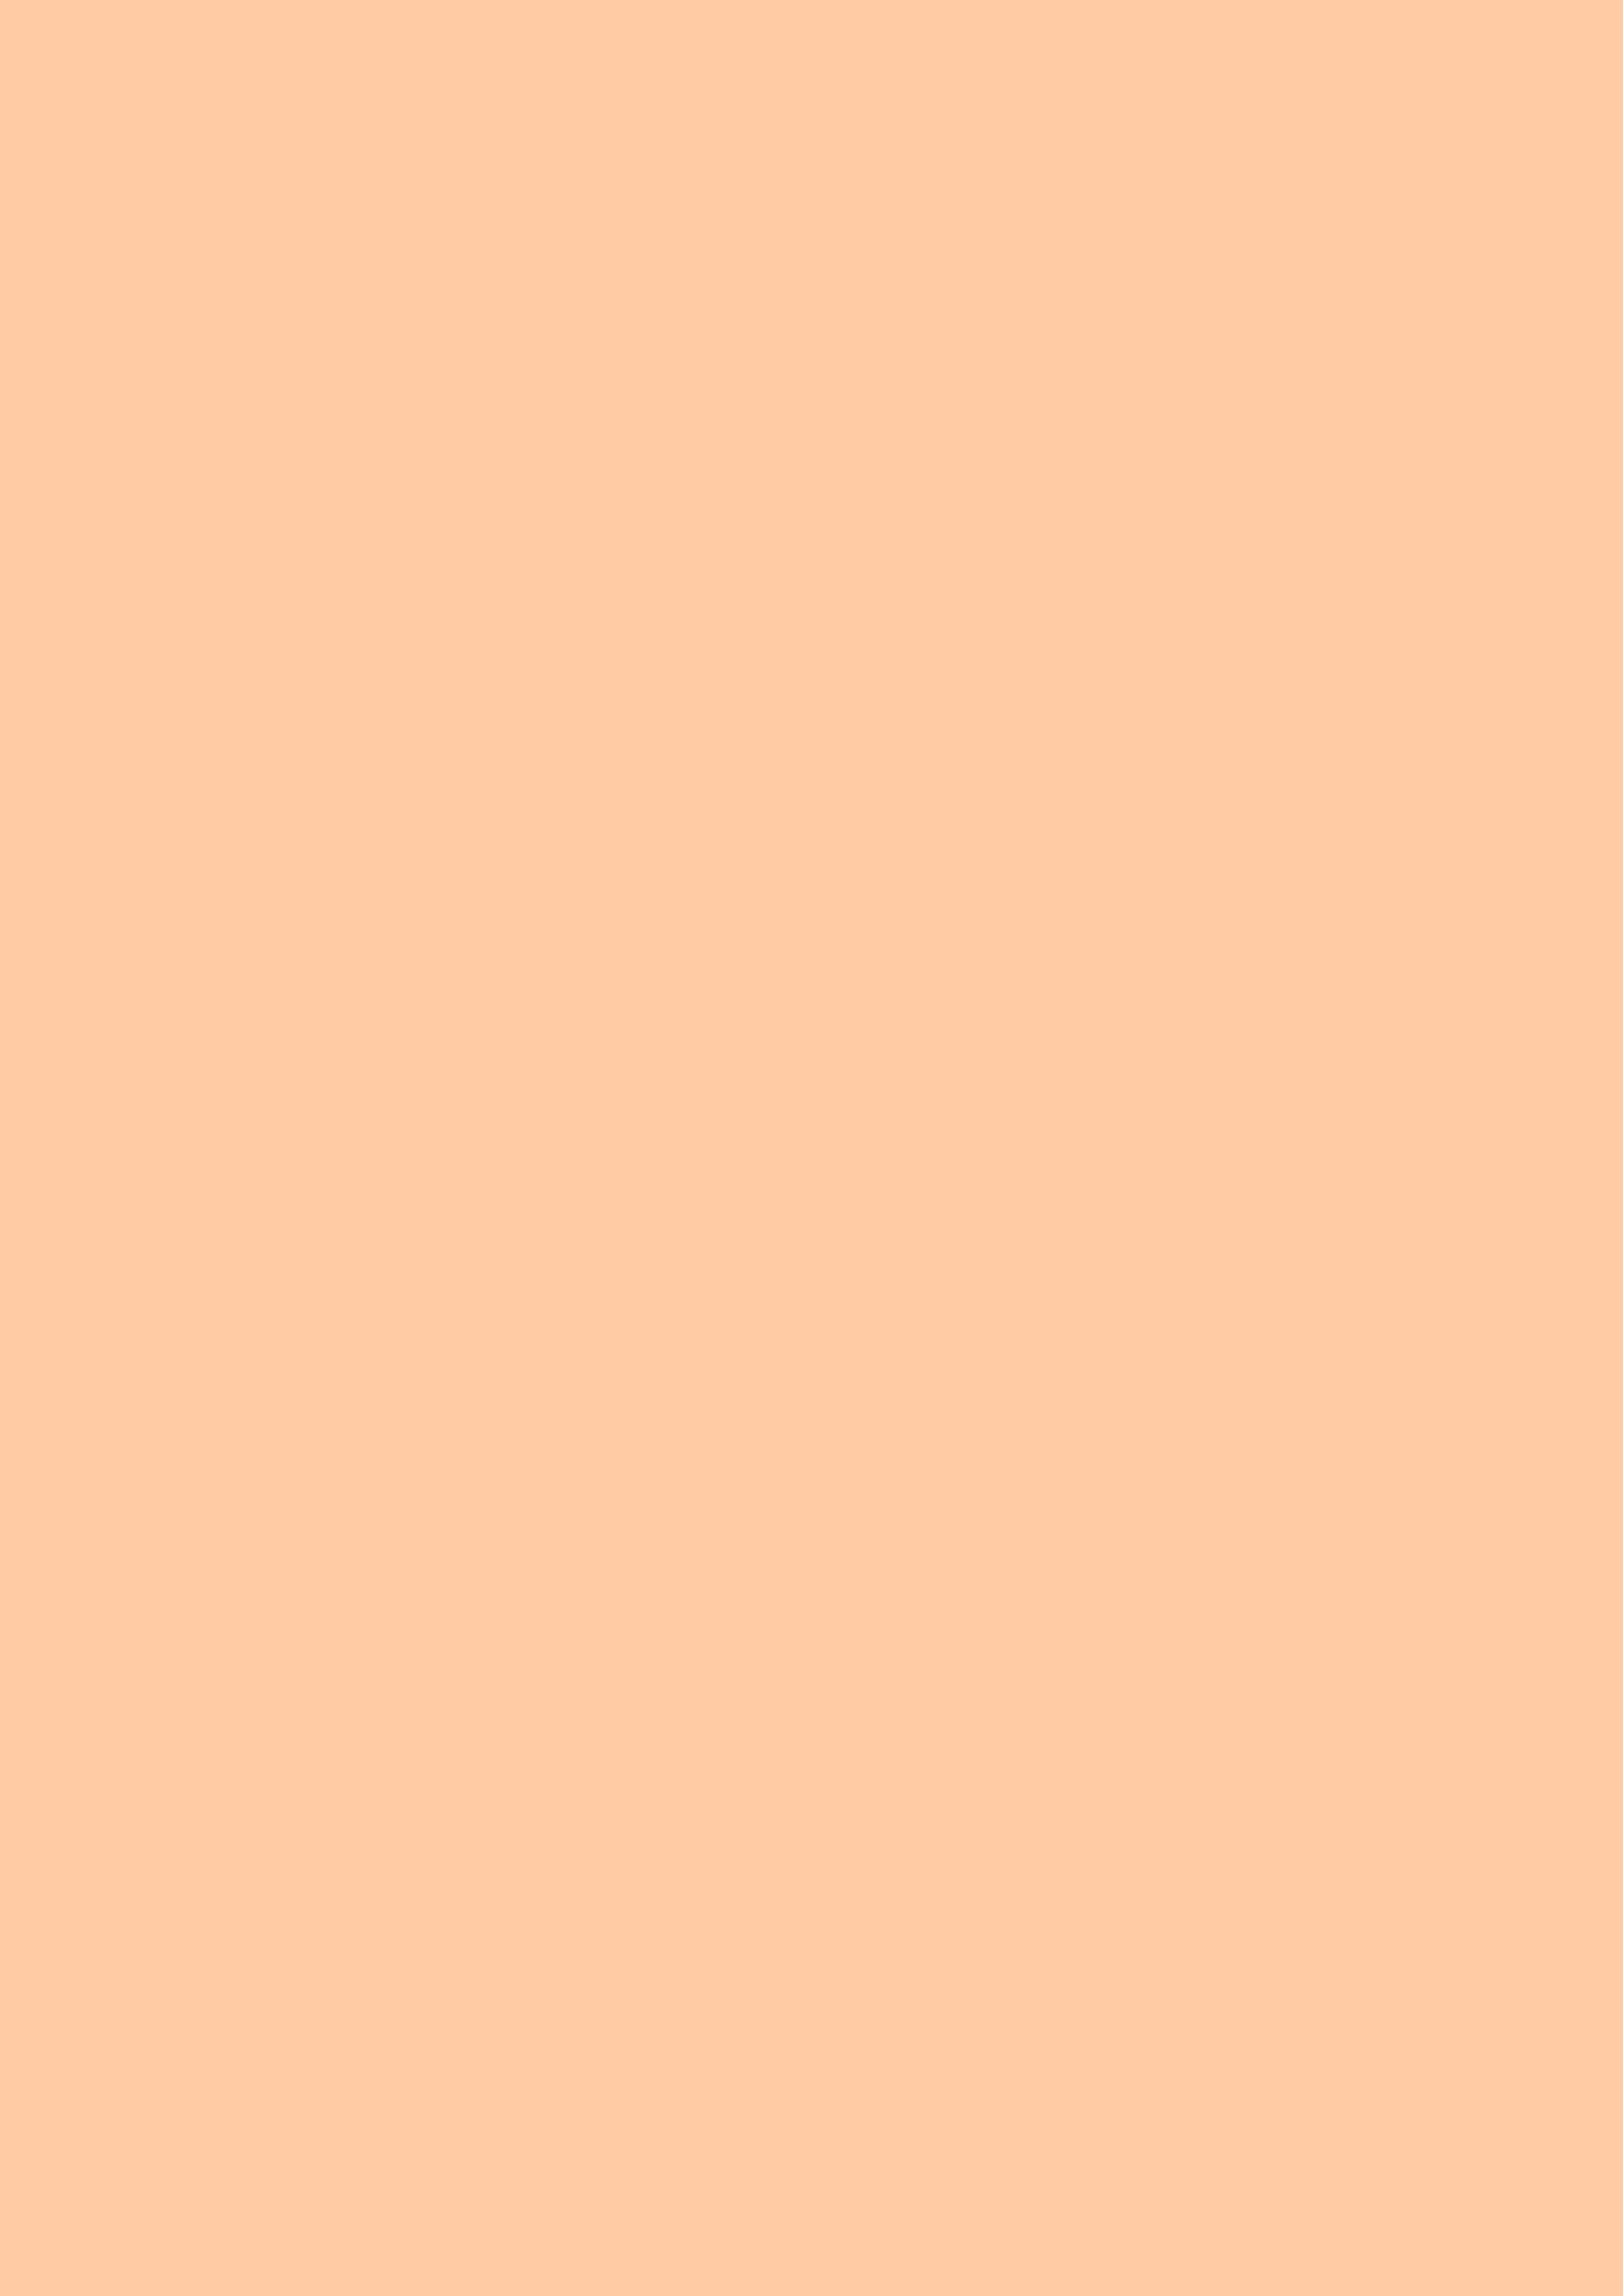 2480x3508 Peach Crayola Solid Color Background